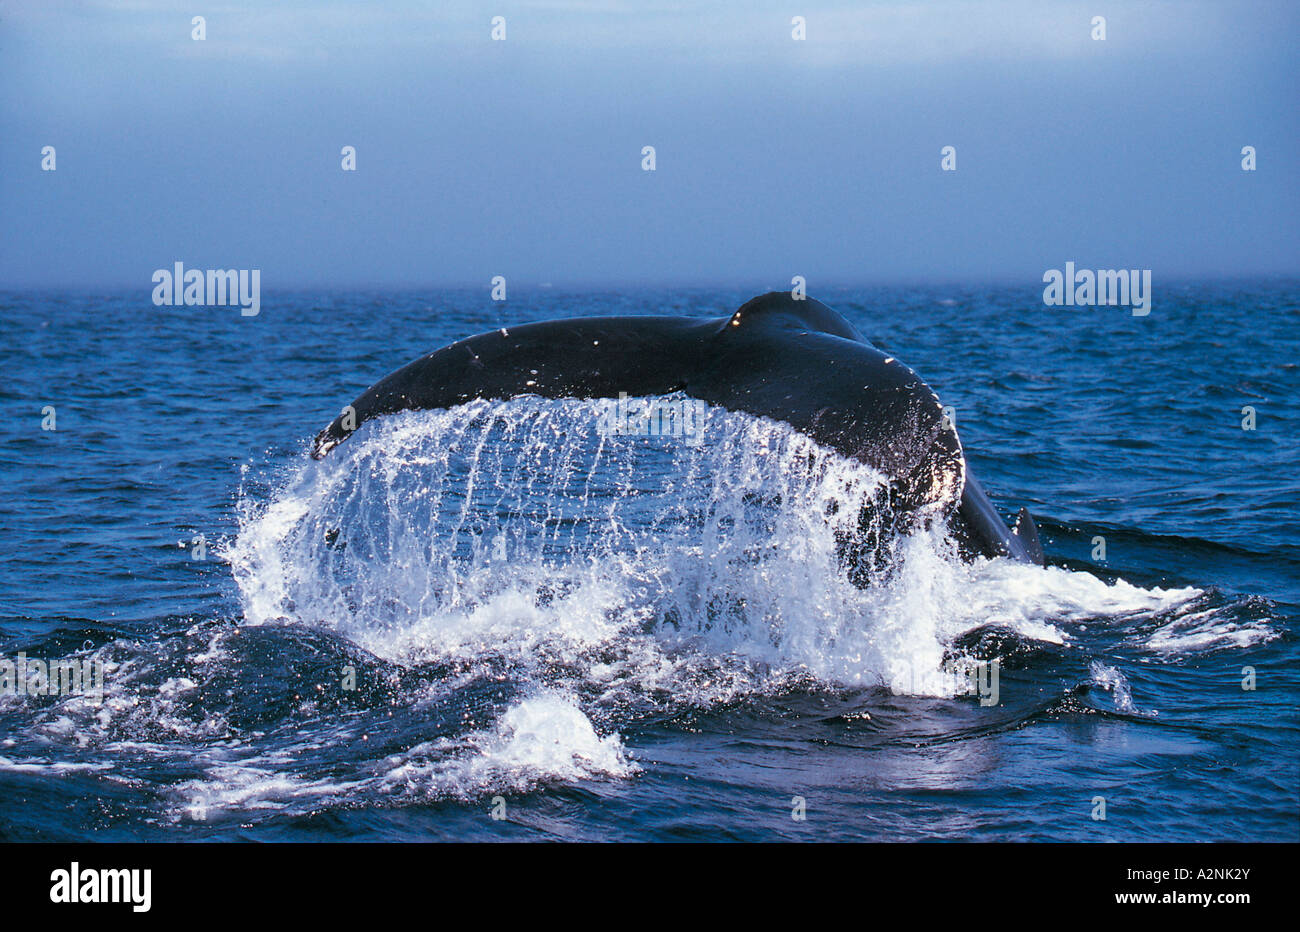 Humpback whale (Megaptera novaeangliae) breaching in sea, Newfoundland, Canada Stock Photo